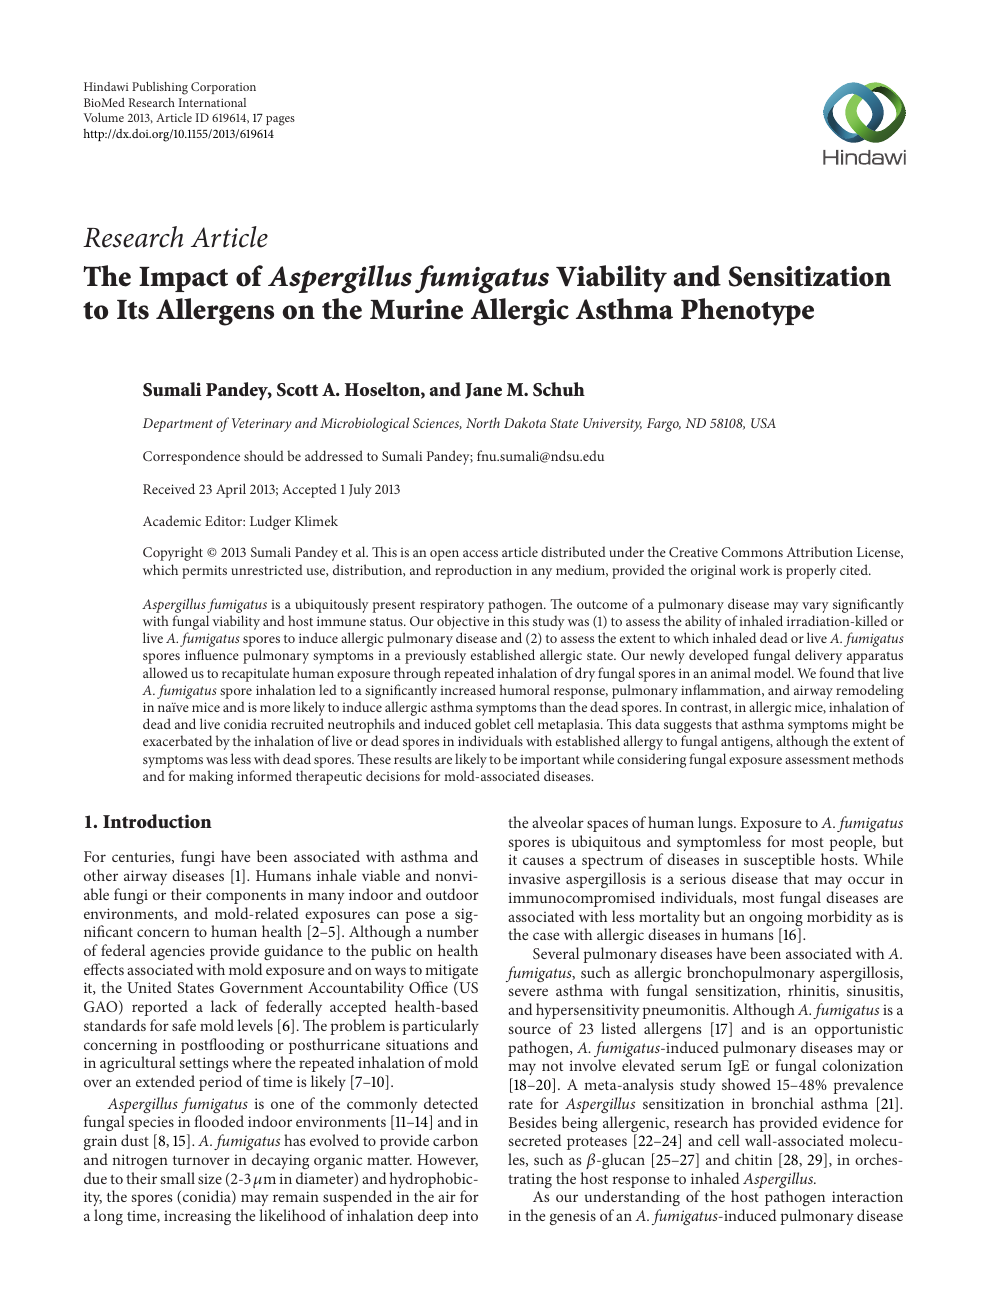 The Impact Of Aspergillus Fumigatus Viability And Sensitization To